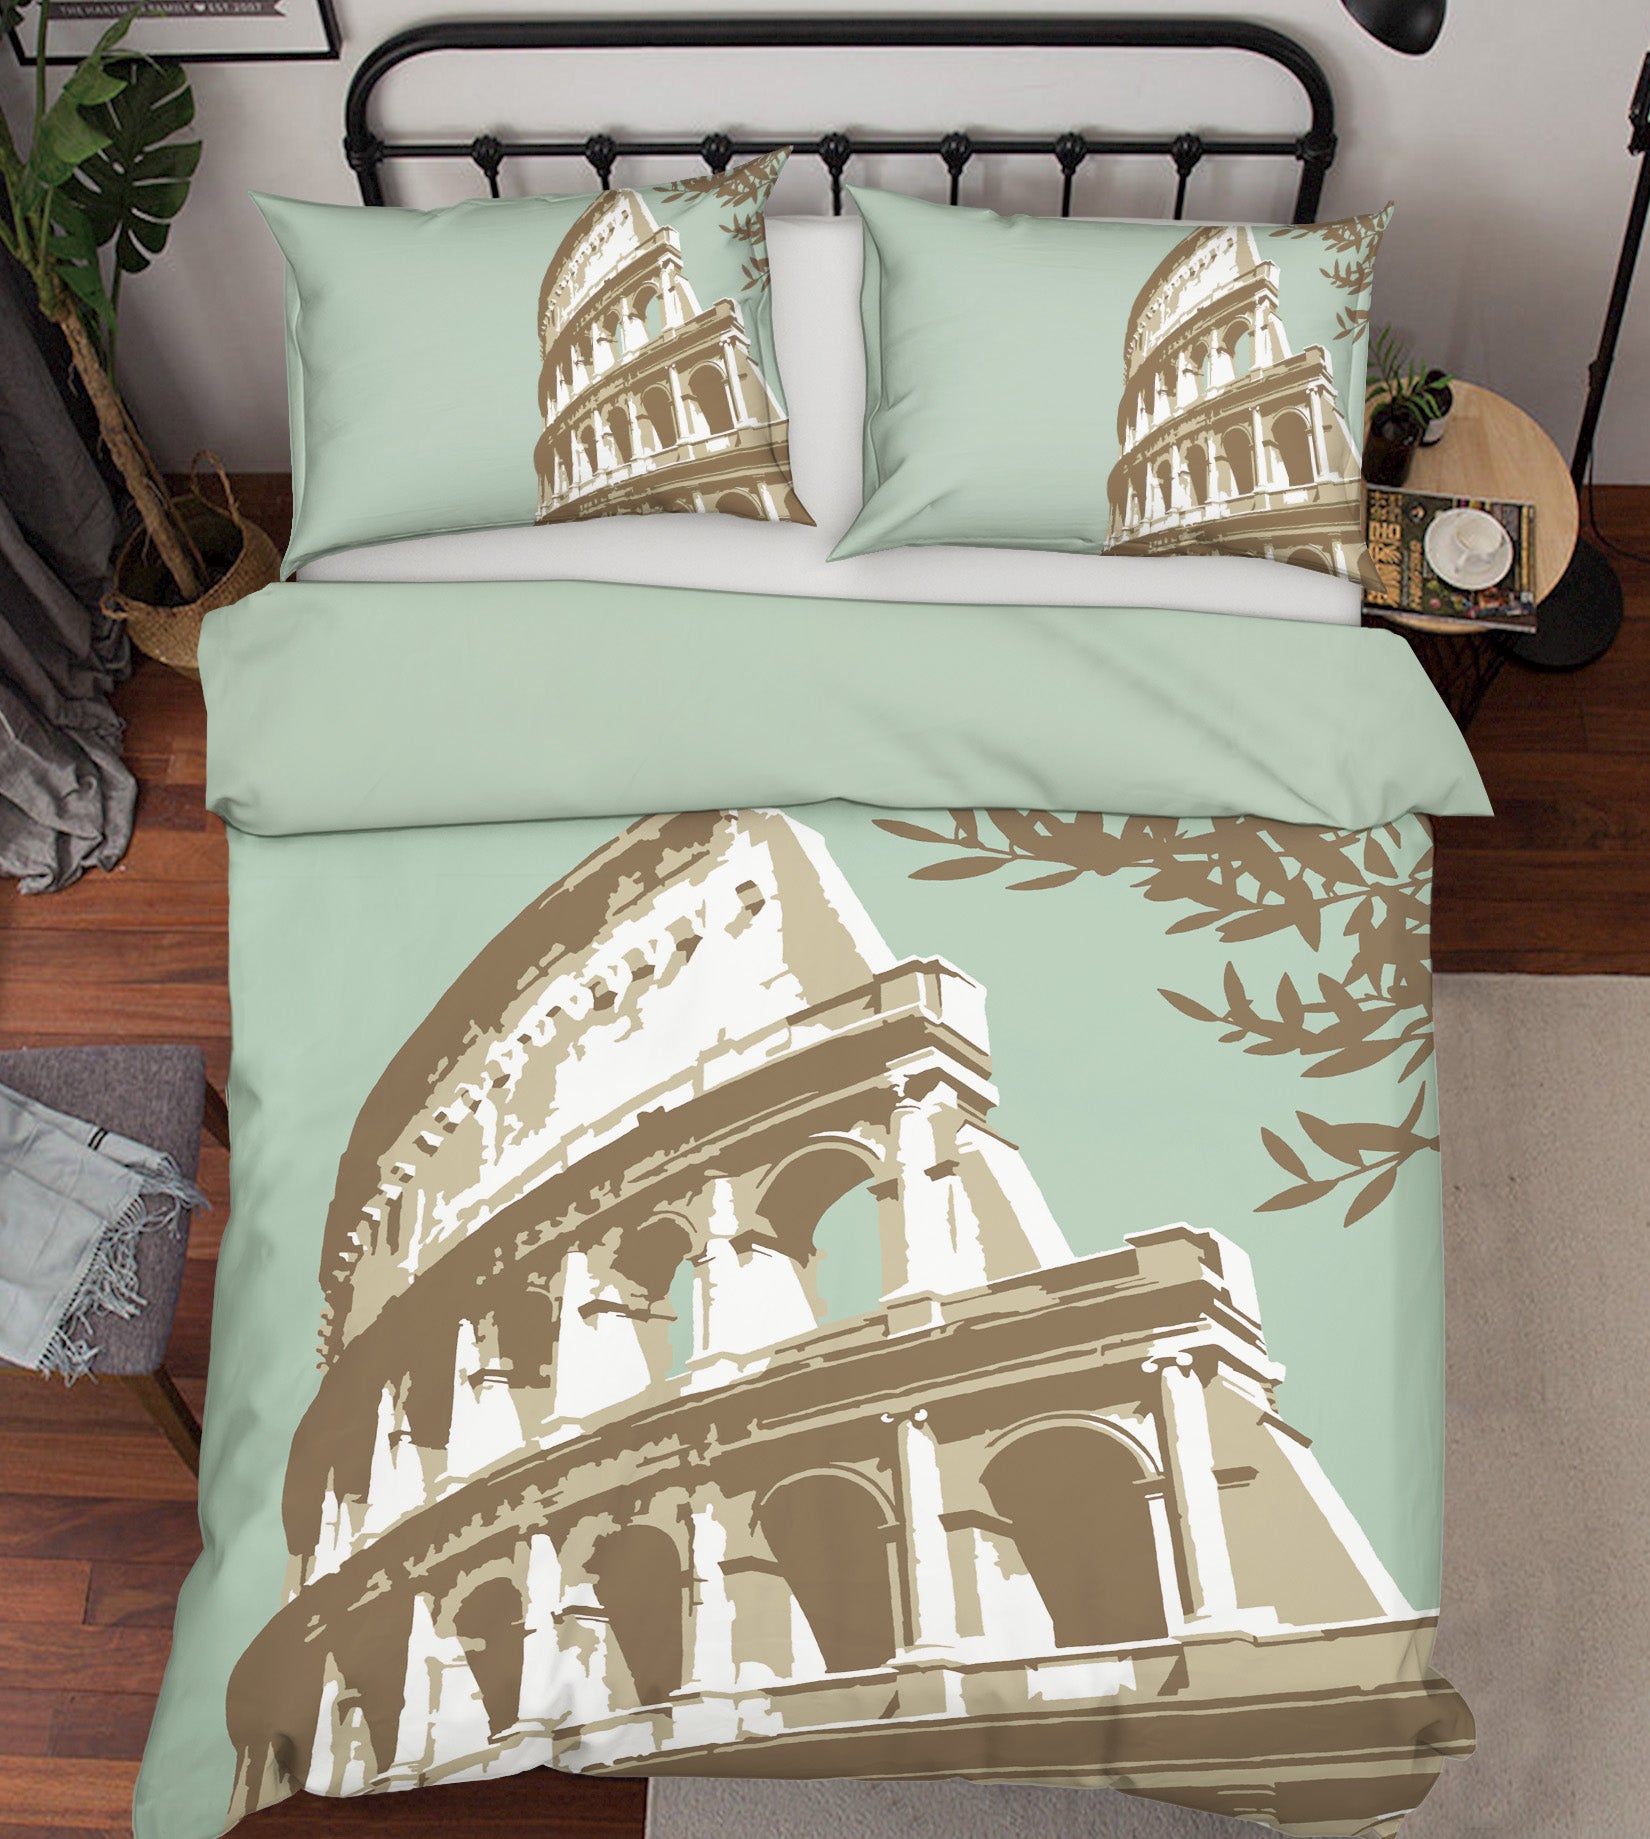 3D Coloseum Rome 2014 Steve Read Bedding Bed Pillowcases Quilt